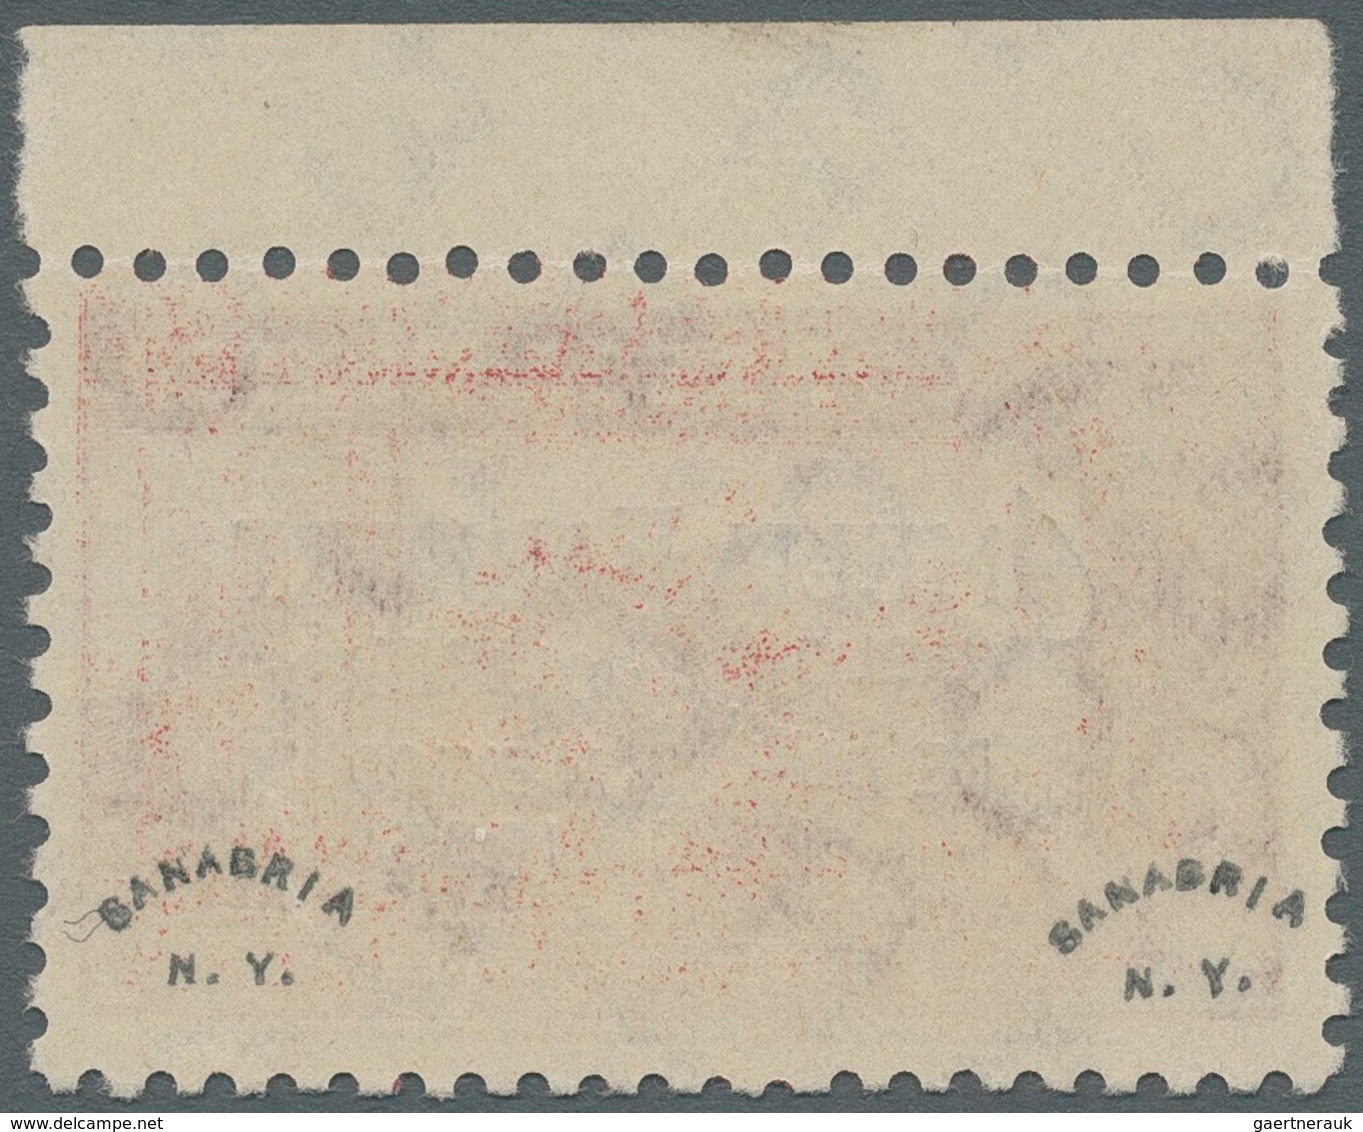 00610 Mexiko: 1935, 20 Centavoss Airmail Issue Carmine With Overprint "Amelia Earhart | Vuelo De Buena Vol - Mexiko